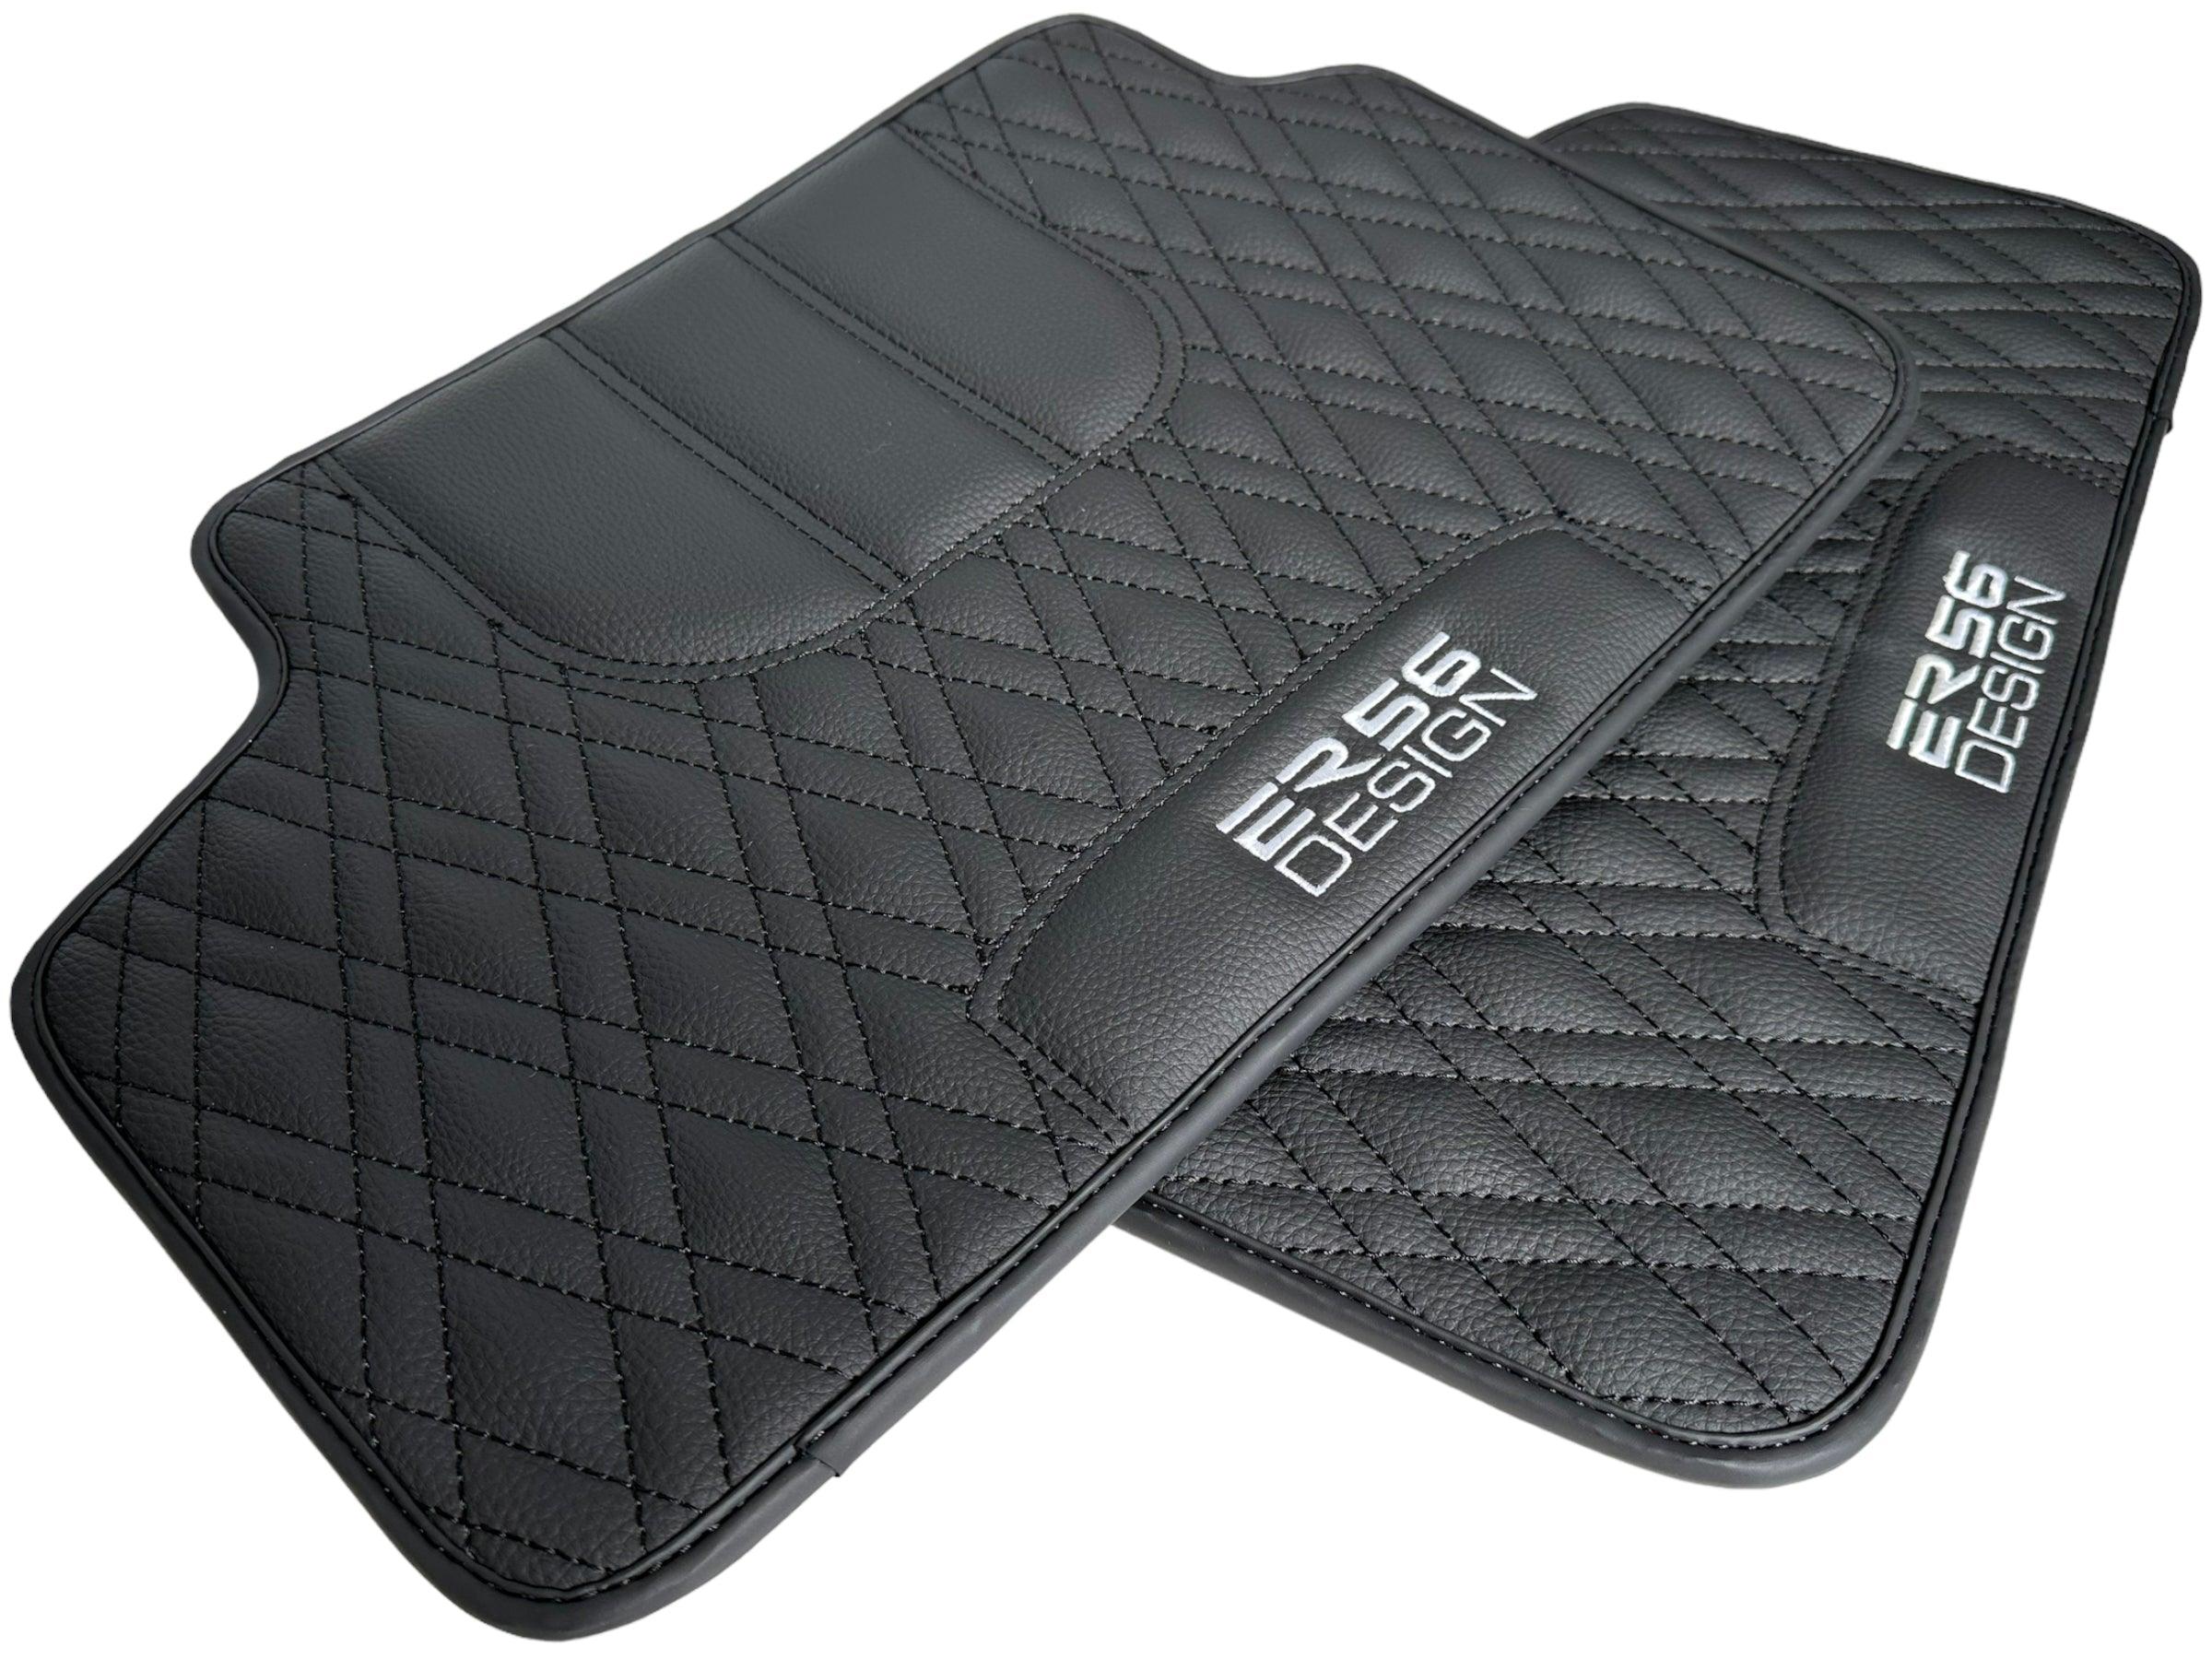 Floor Mats For BMW 7 Series E38 Black Leather Er56 Design - AutoWin